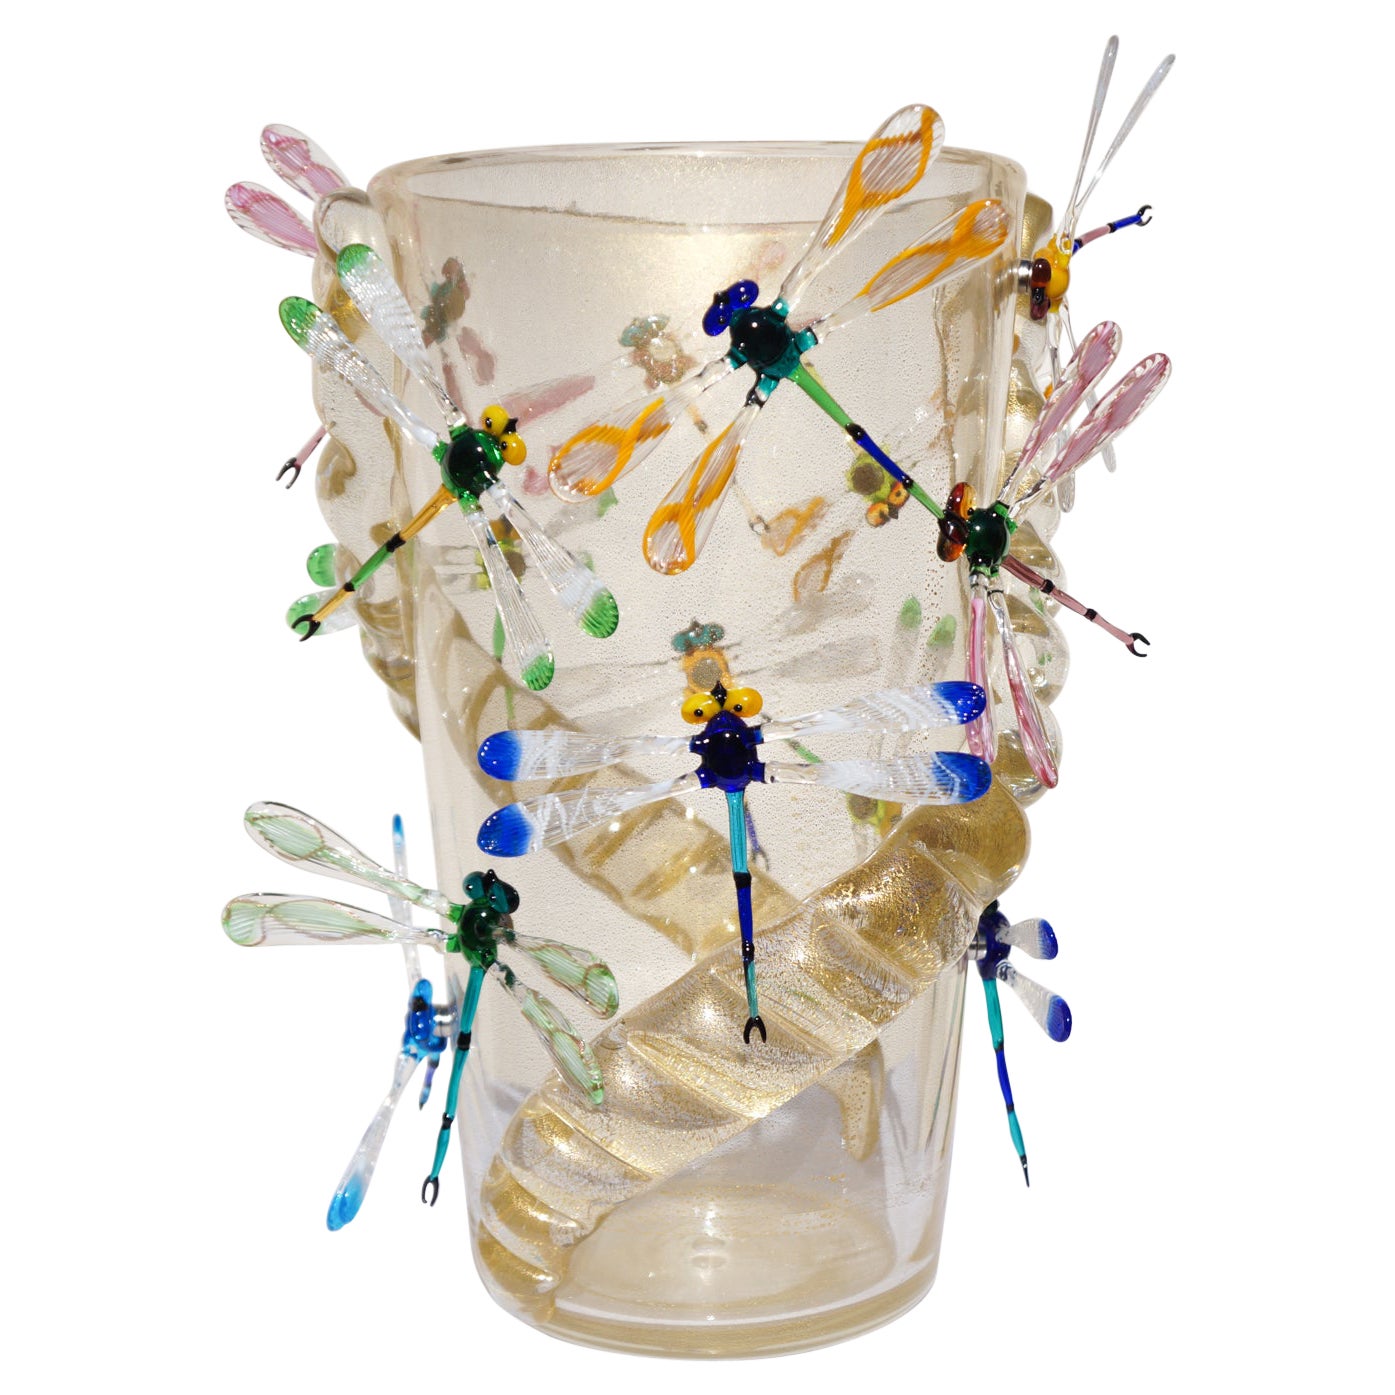 Costantini Diego Modern Echtes Gold Made Murano Glass Vase mit Libellen